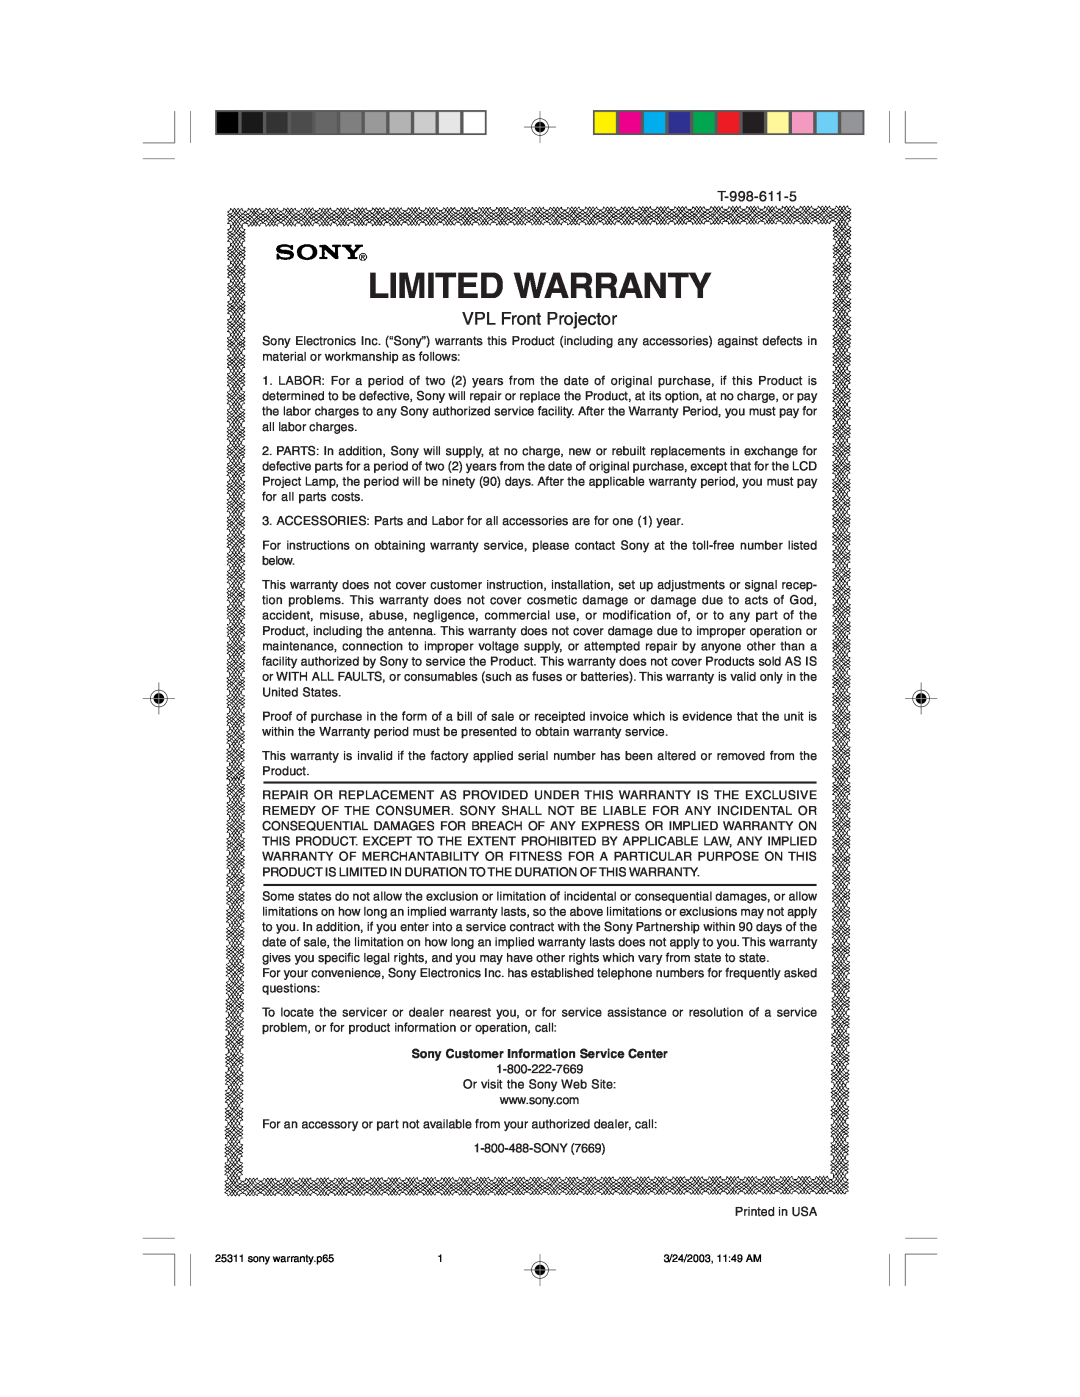 Sony T-998-611-5 warranty Limited Warranty, VPL Front Projector, Sony Customer Information Service Center 